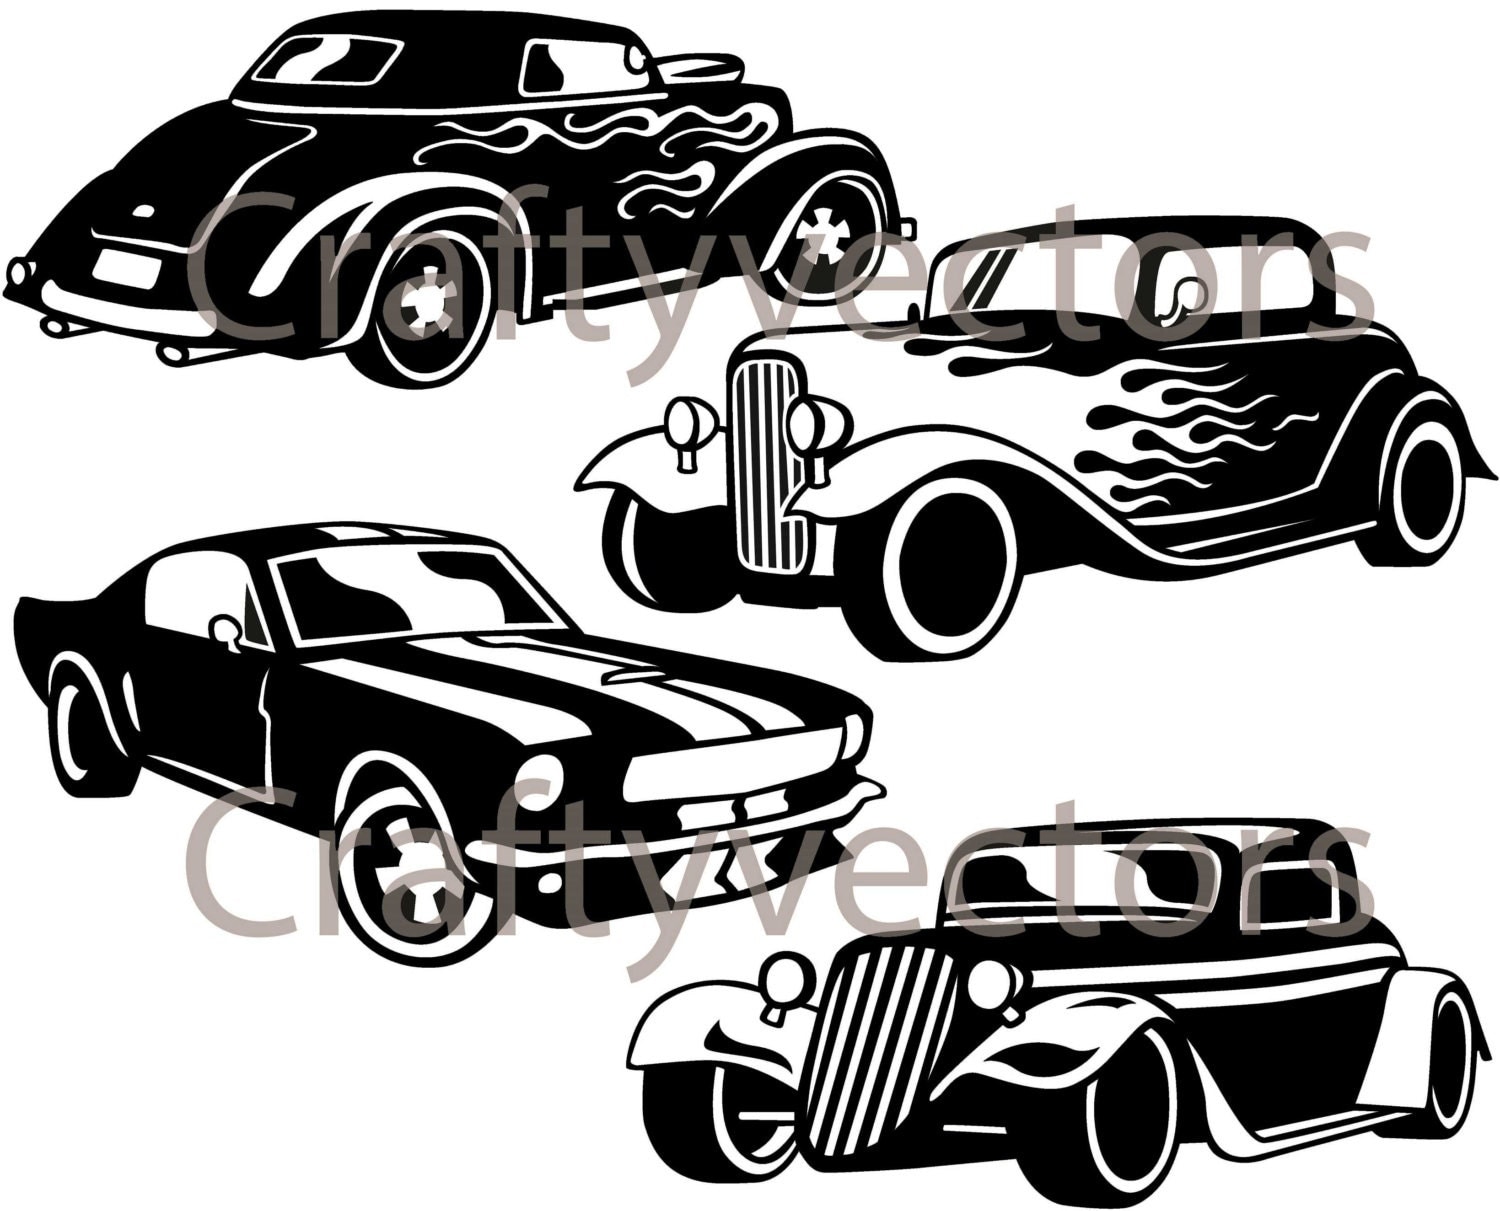 Hot Rod Cars SVG vector files